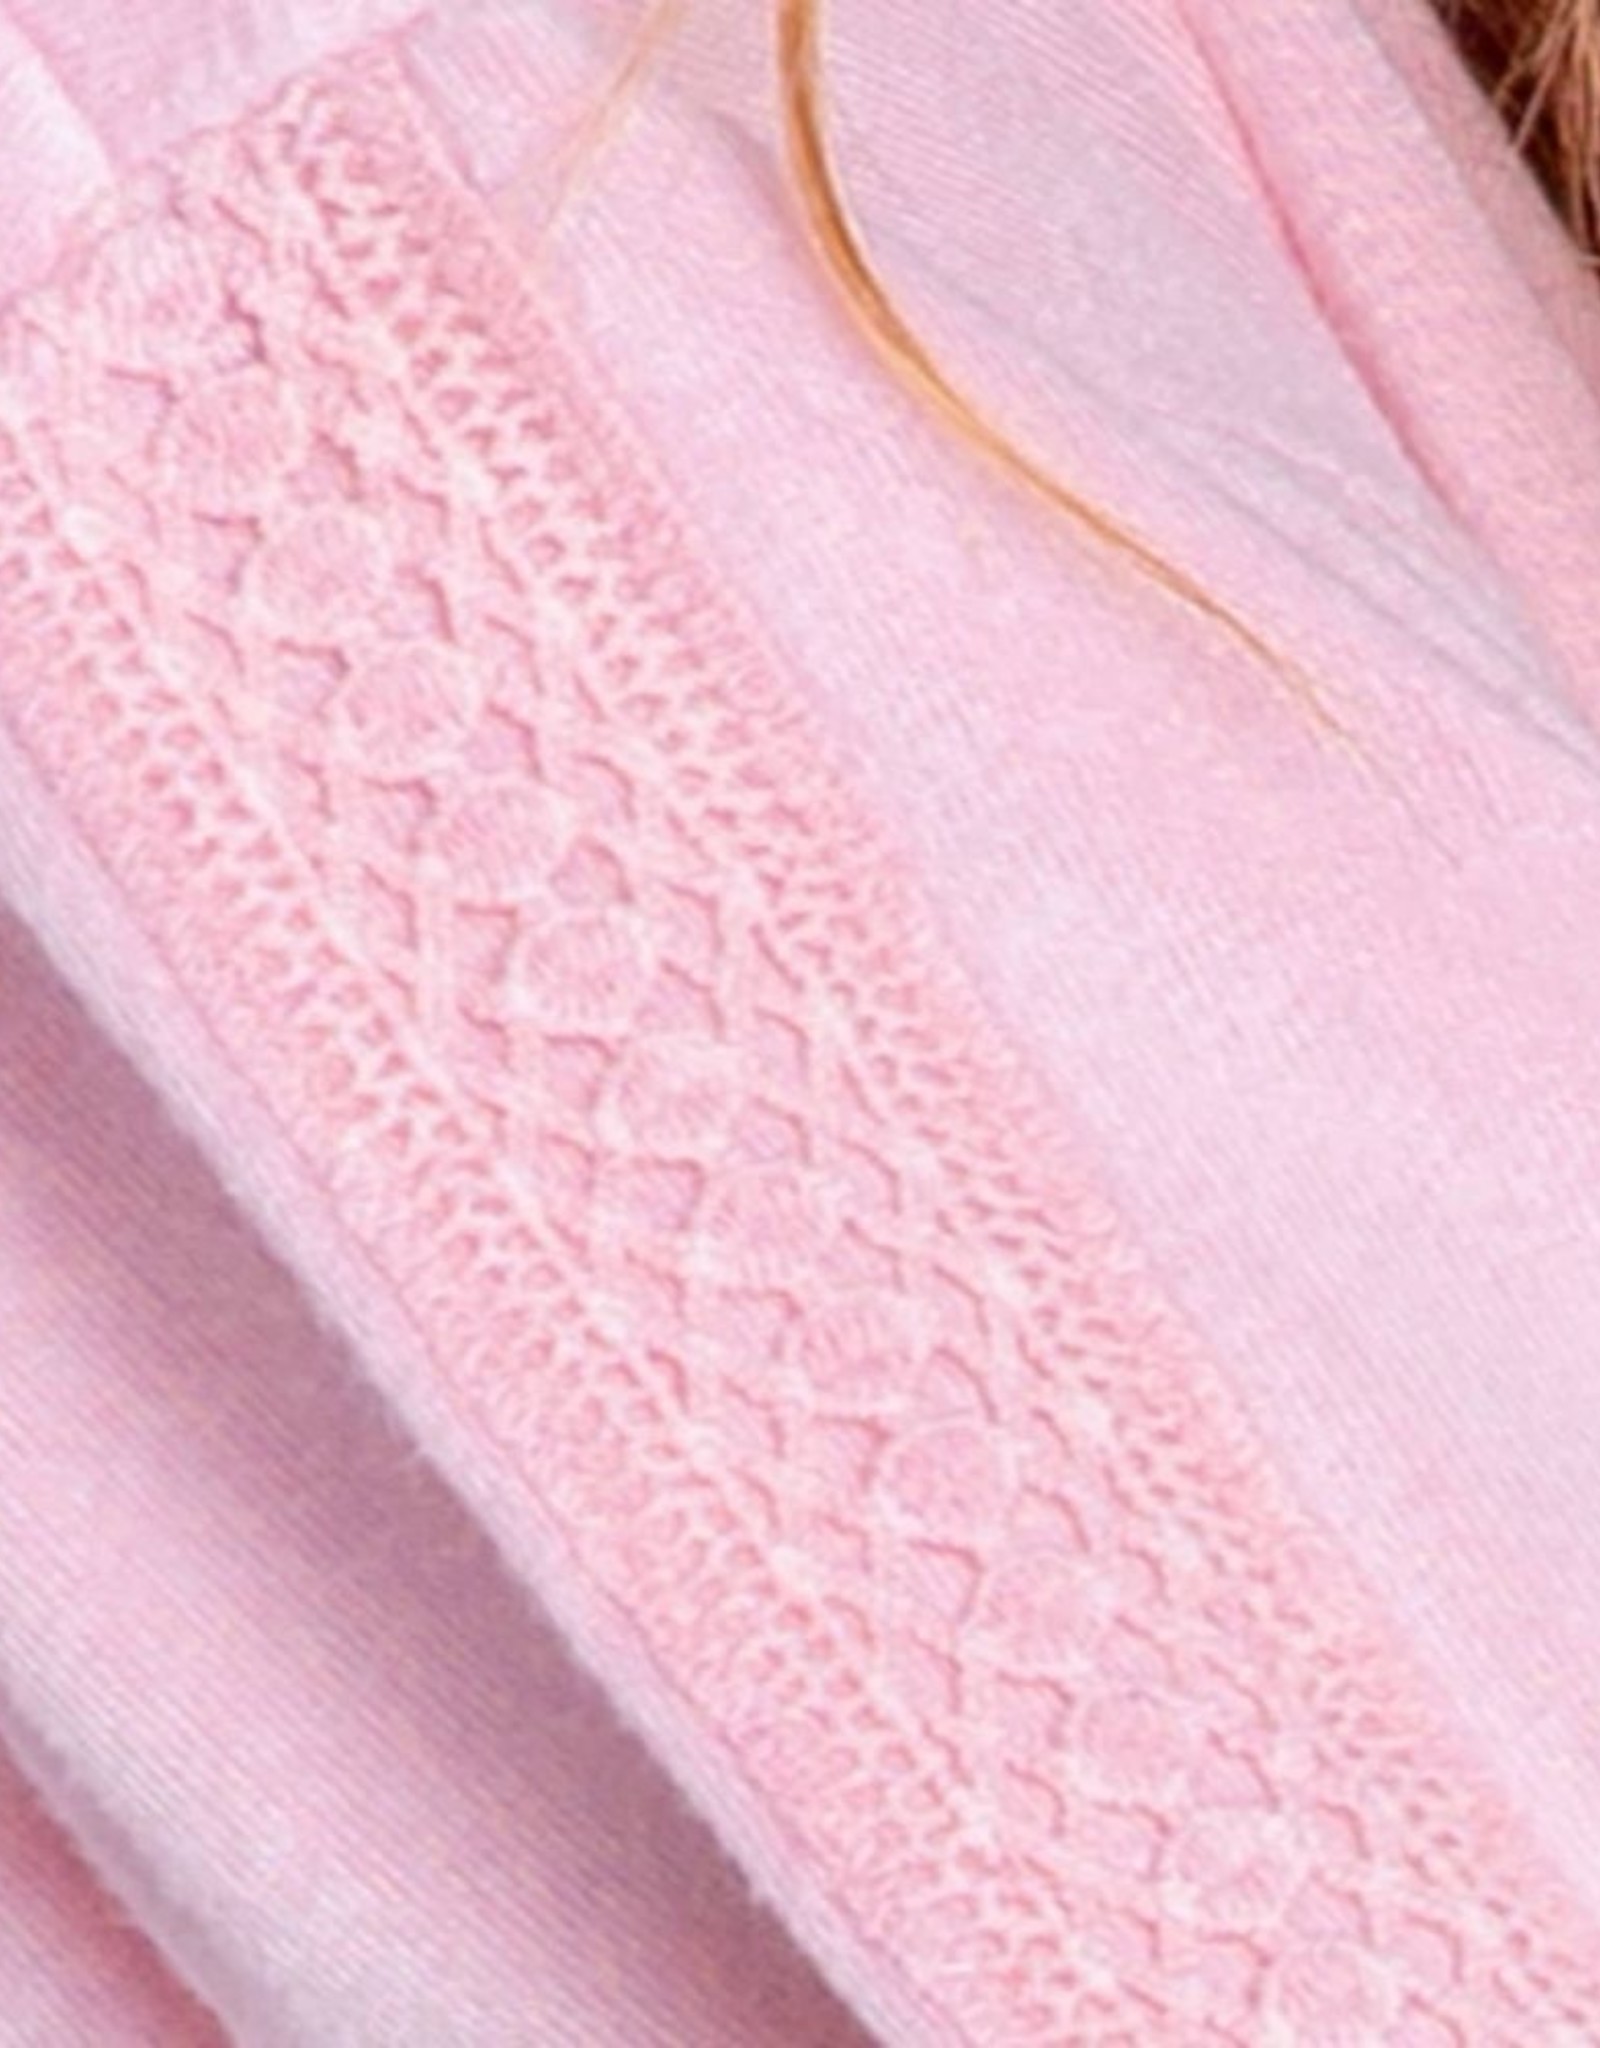 PJ Salvage Sunset Hues Crocheted Jogger Pant Pink